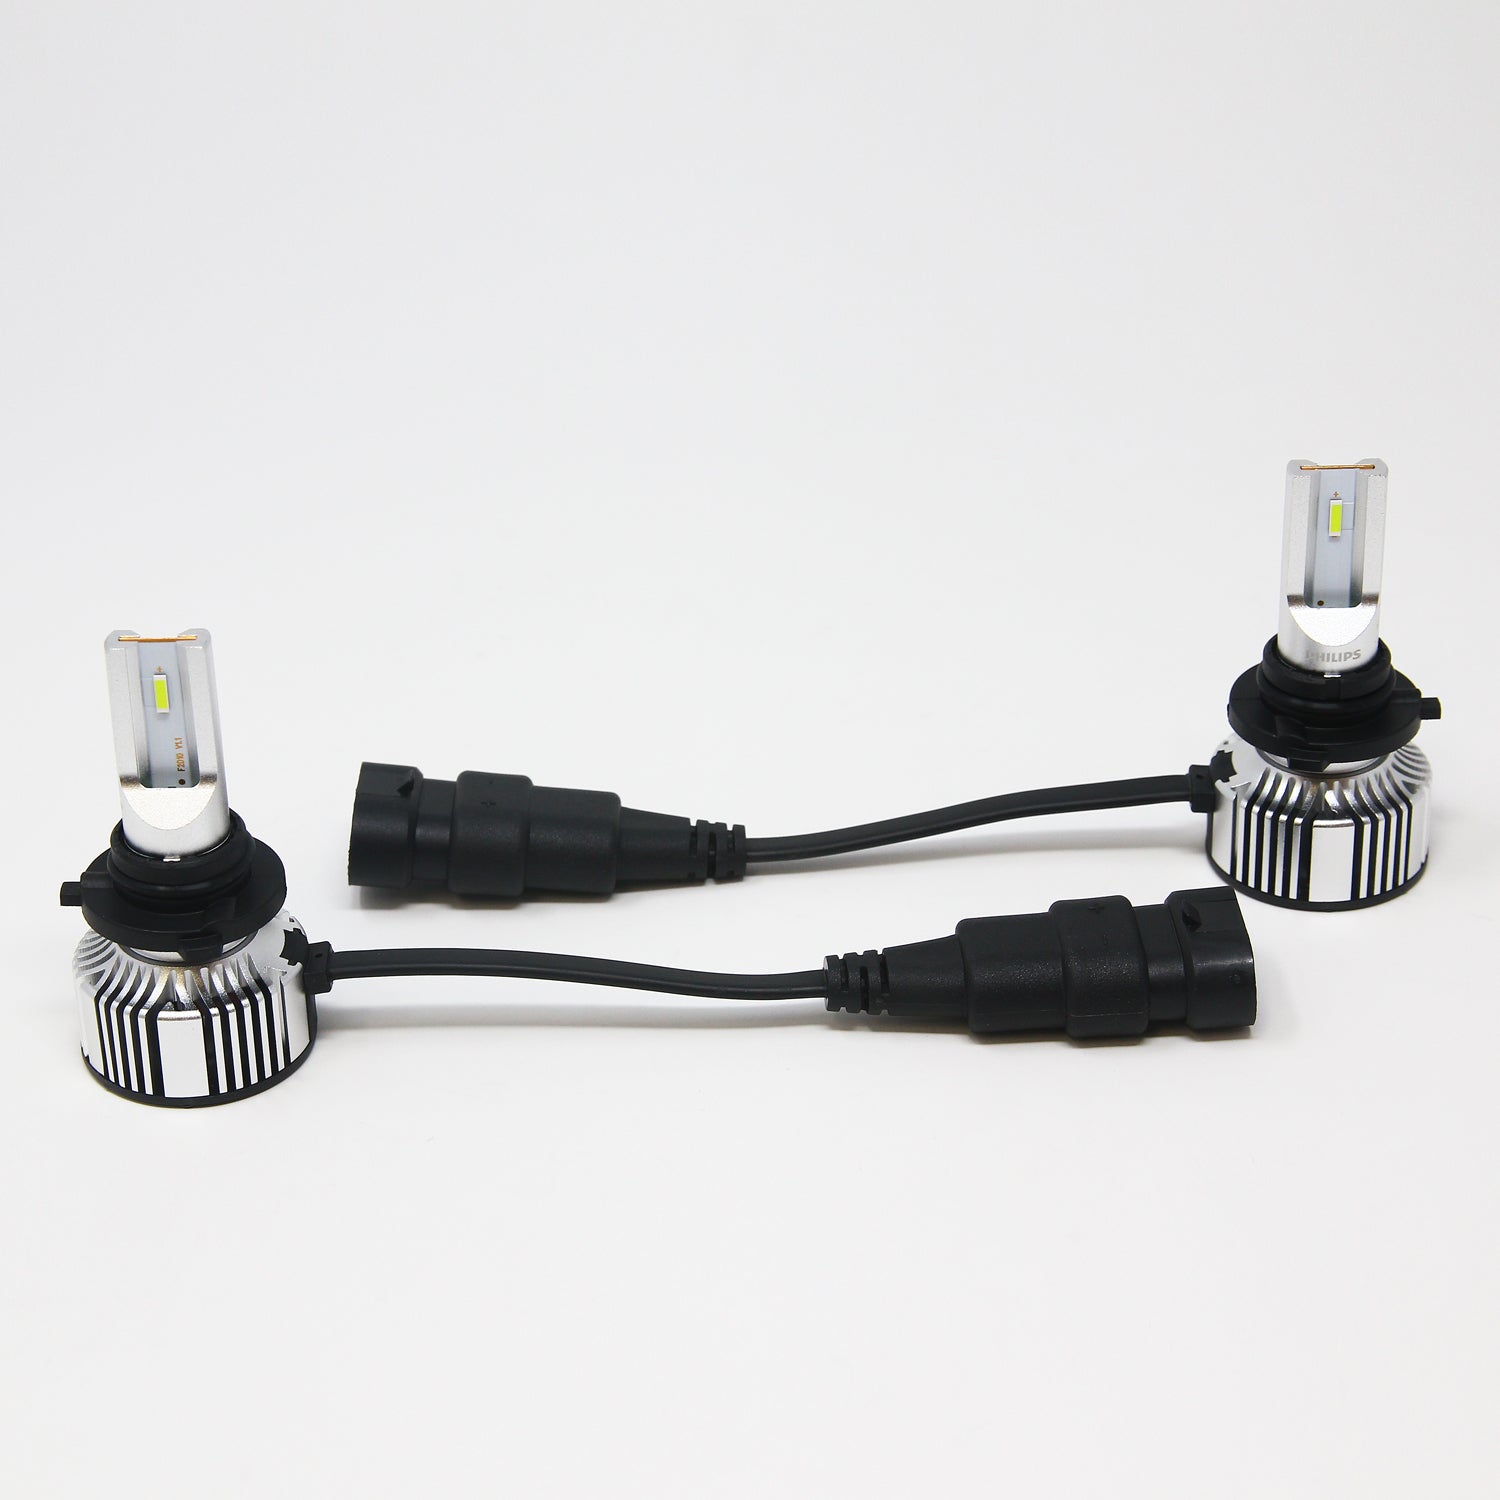  Philips Automotive Lighting 9145 Ultinon Essential LED Fog  Lights, 2 Pack : Automotive